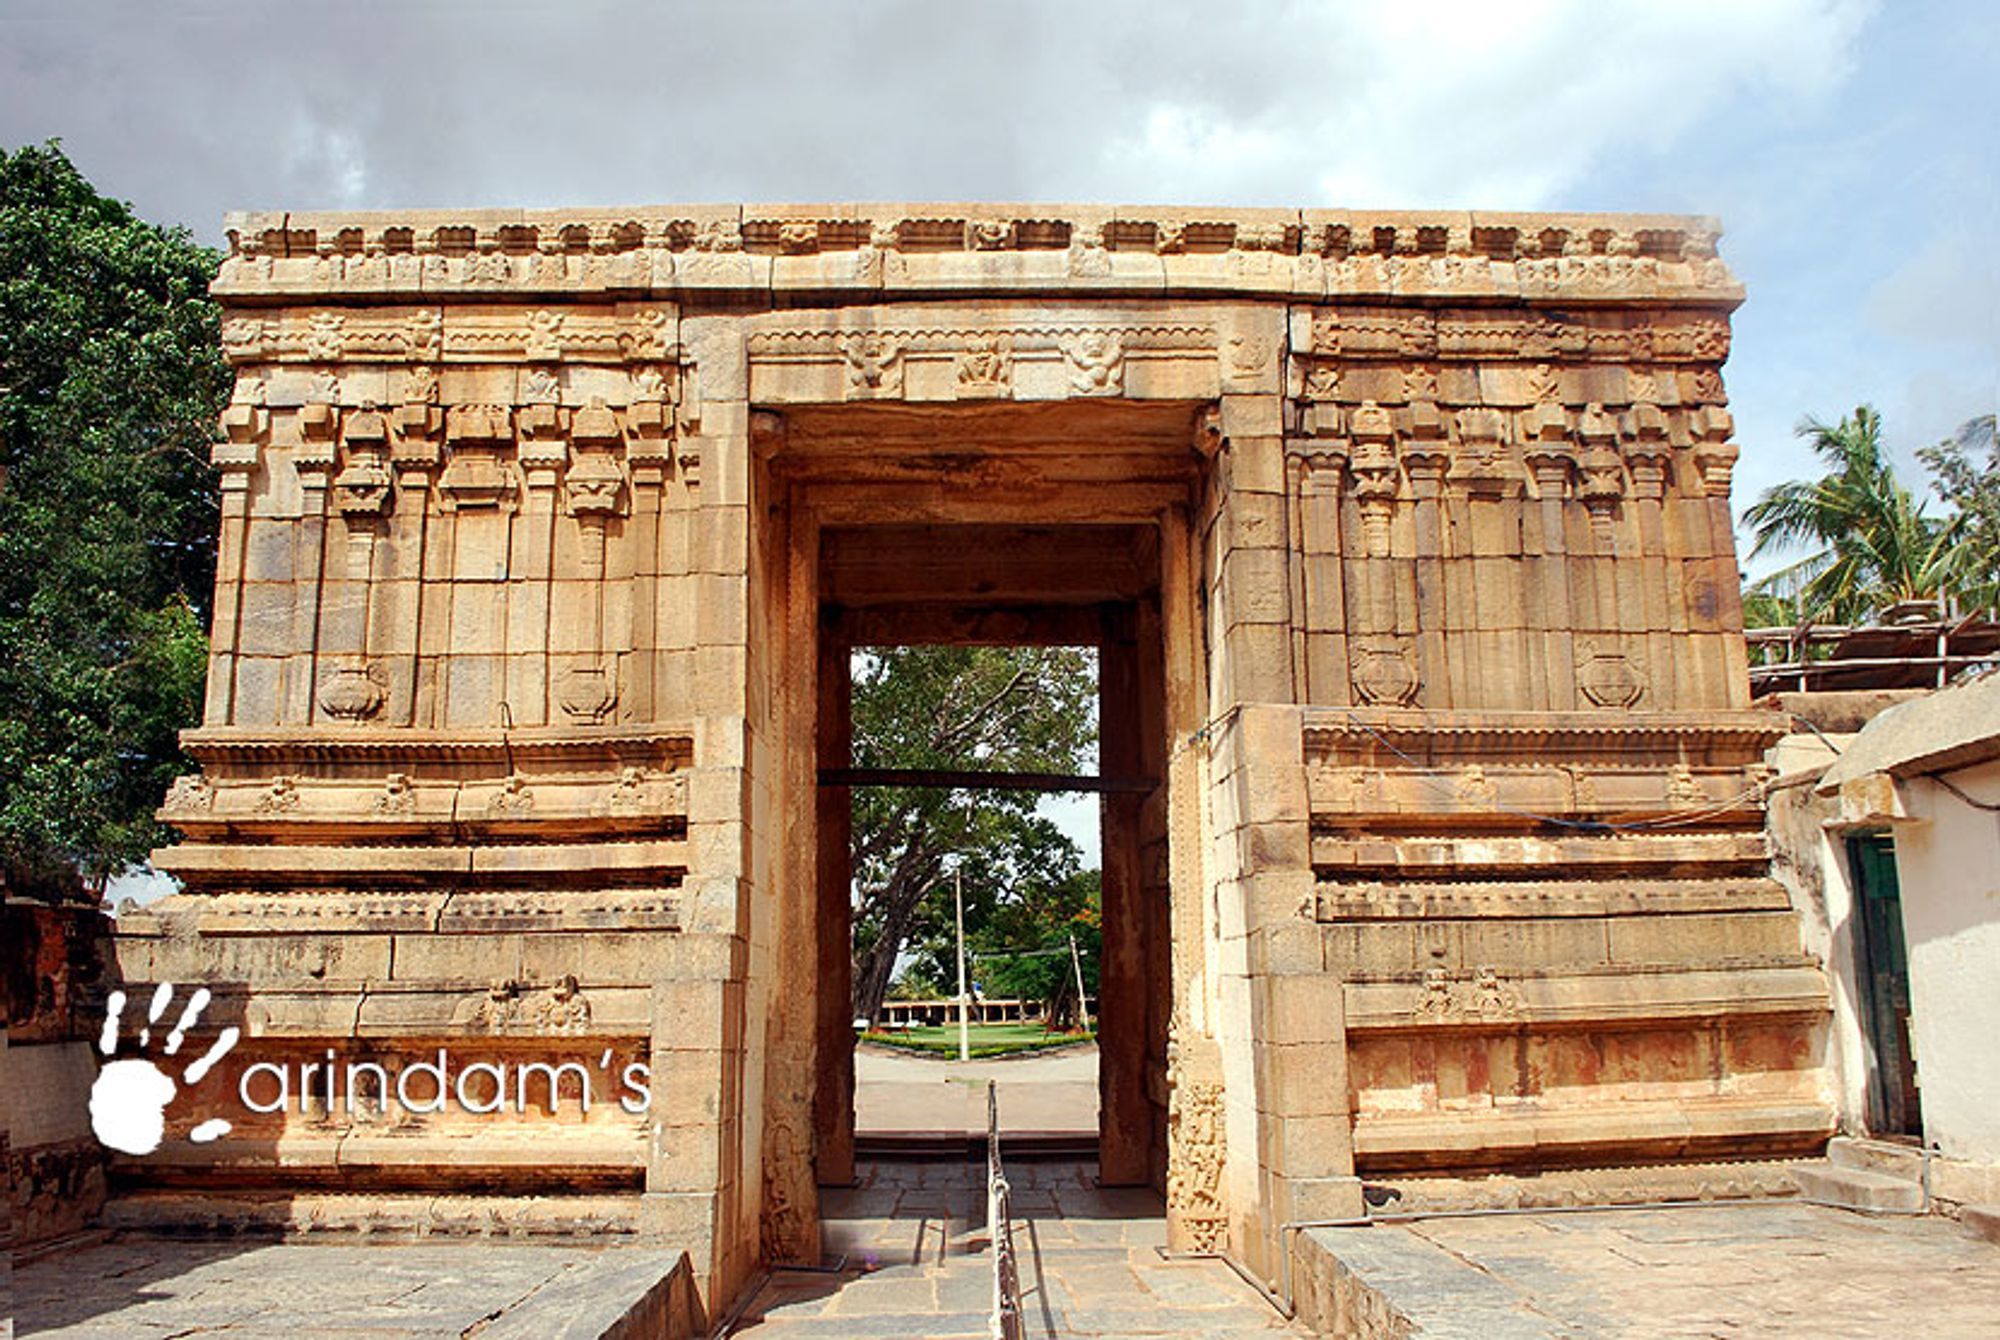 The entrance to the temple I Source: bangaloretourism.com